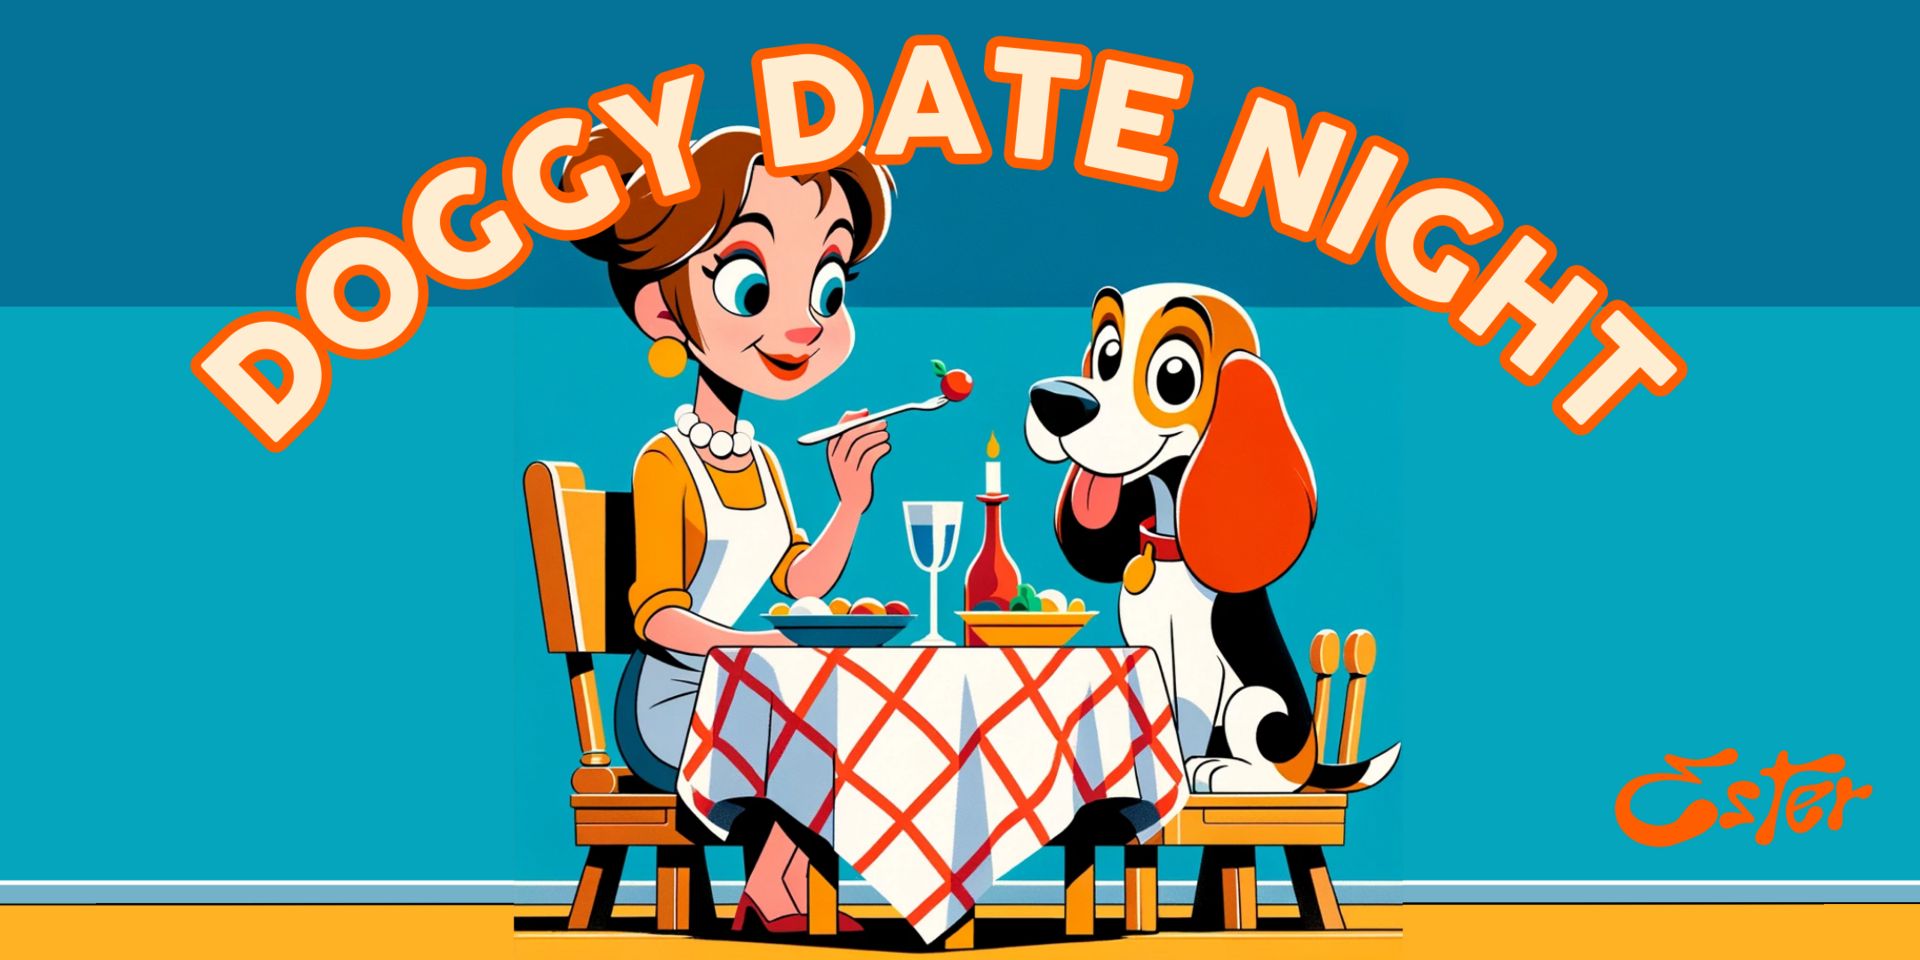 Doggy Date Night, London, England, United Kingdom